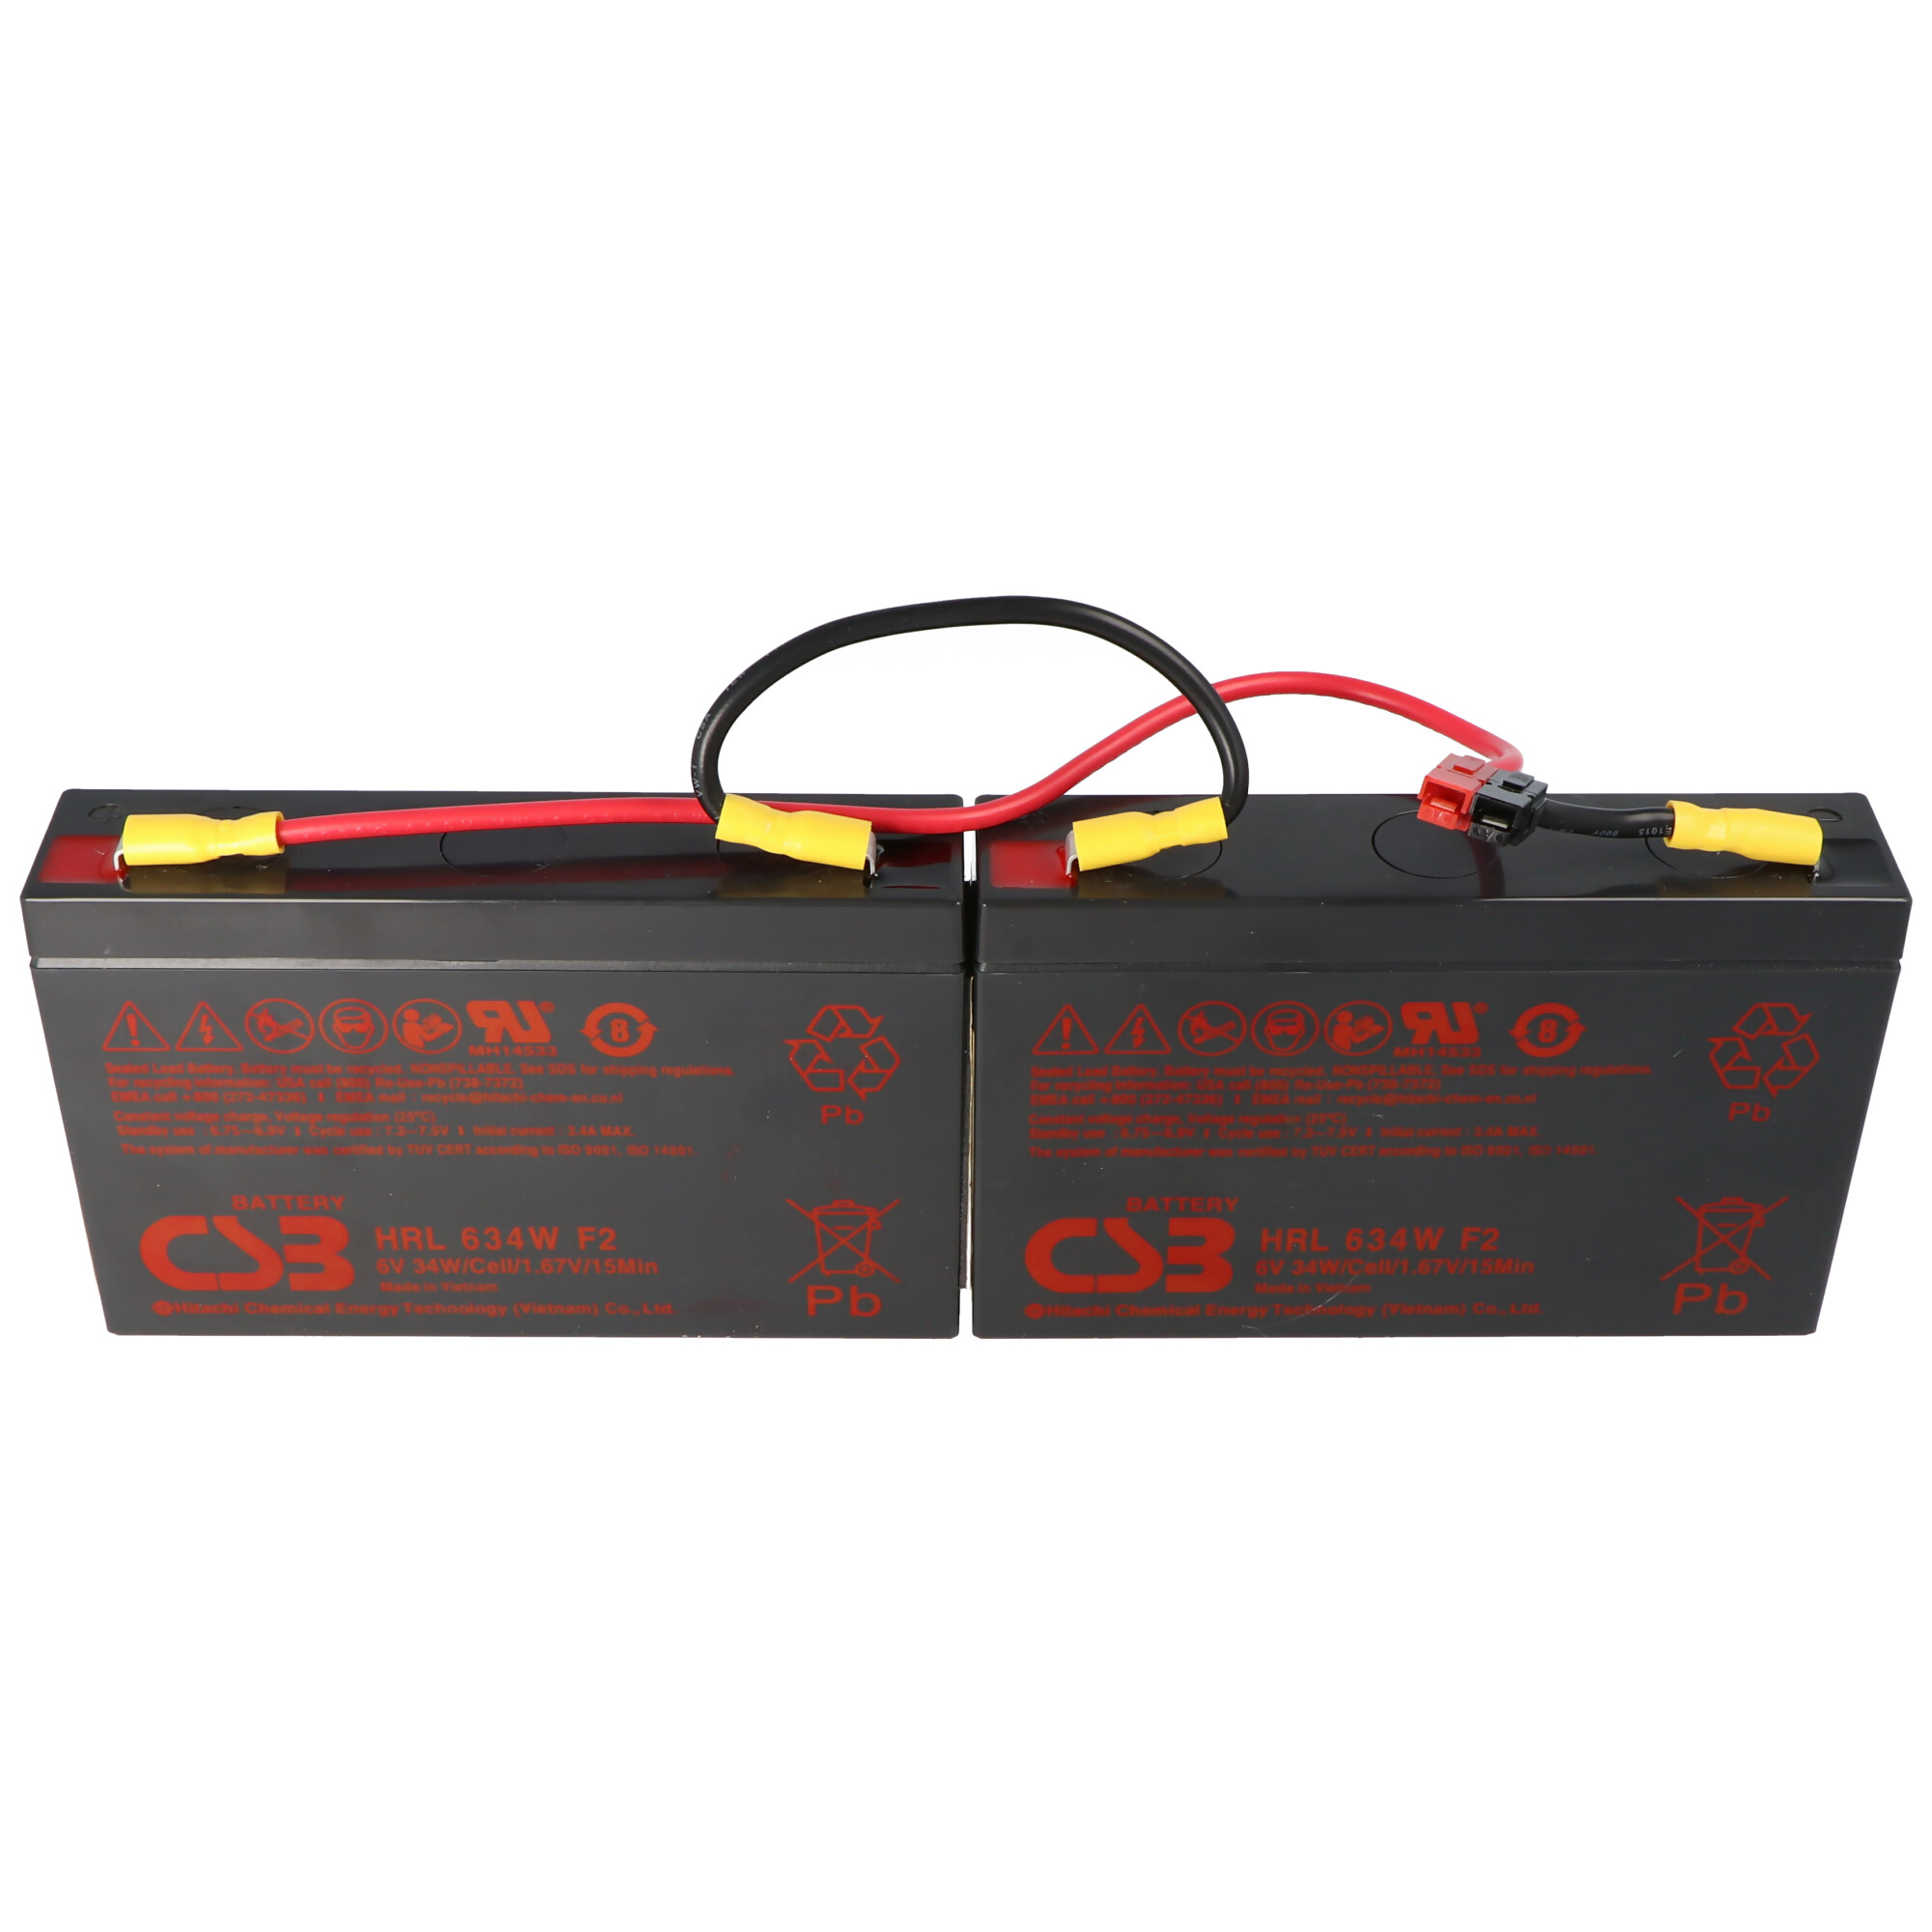 APC RBC18 SCD18 USV Akkuset geeignet für APC UPS PS250, PS250i, PS450, PS450i, PS450i1U, vormontiert mit Kabel und Stecker 302x102x36mm